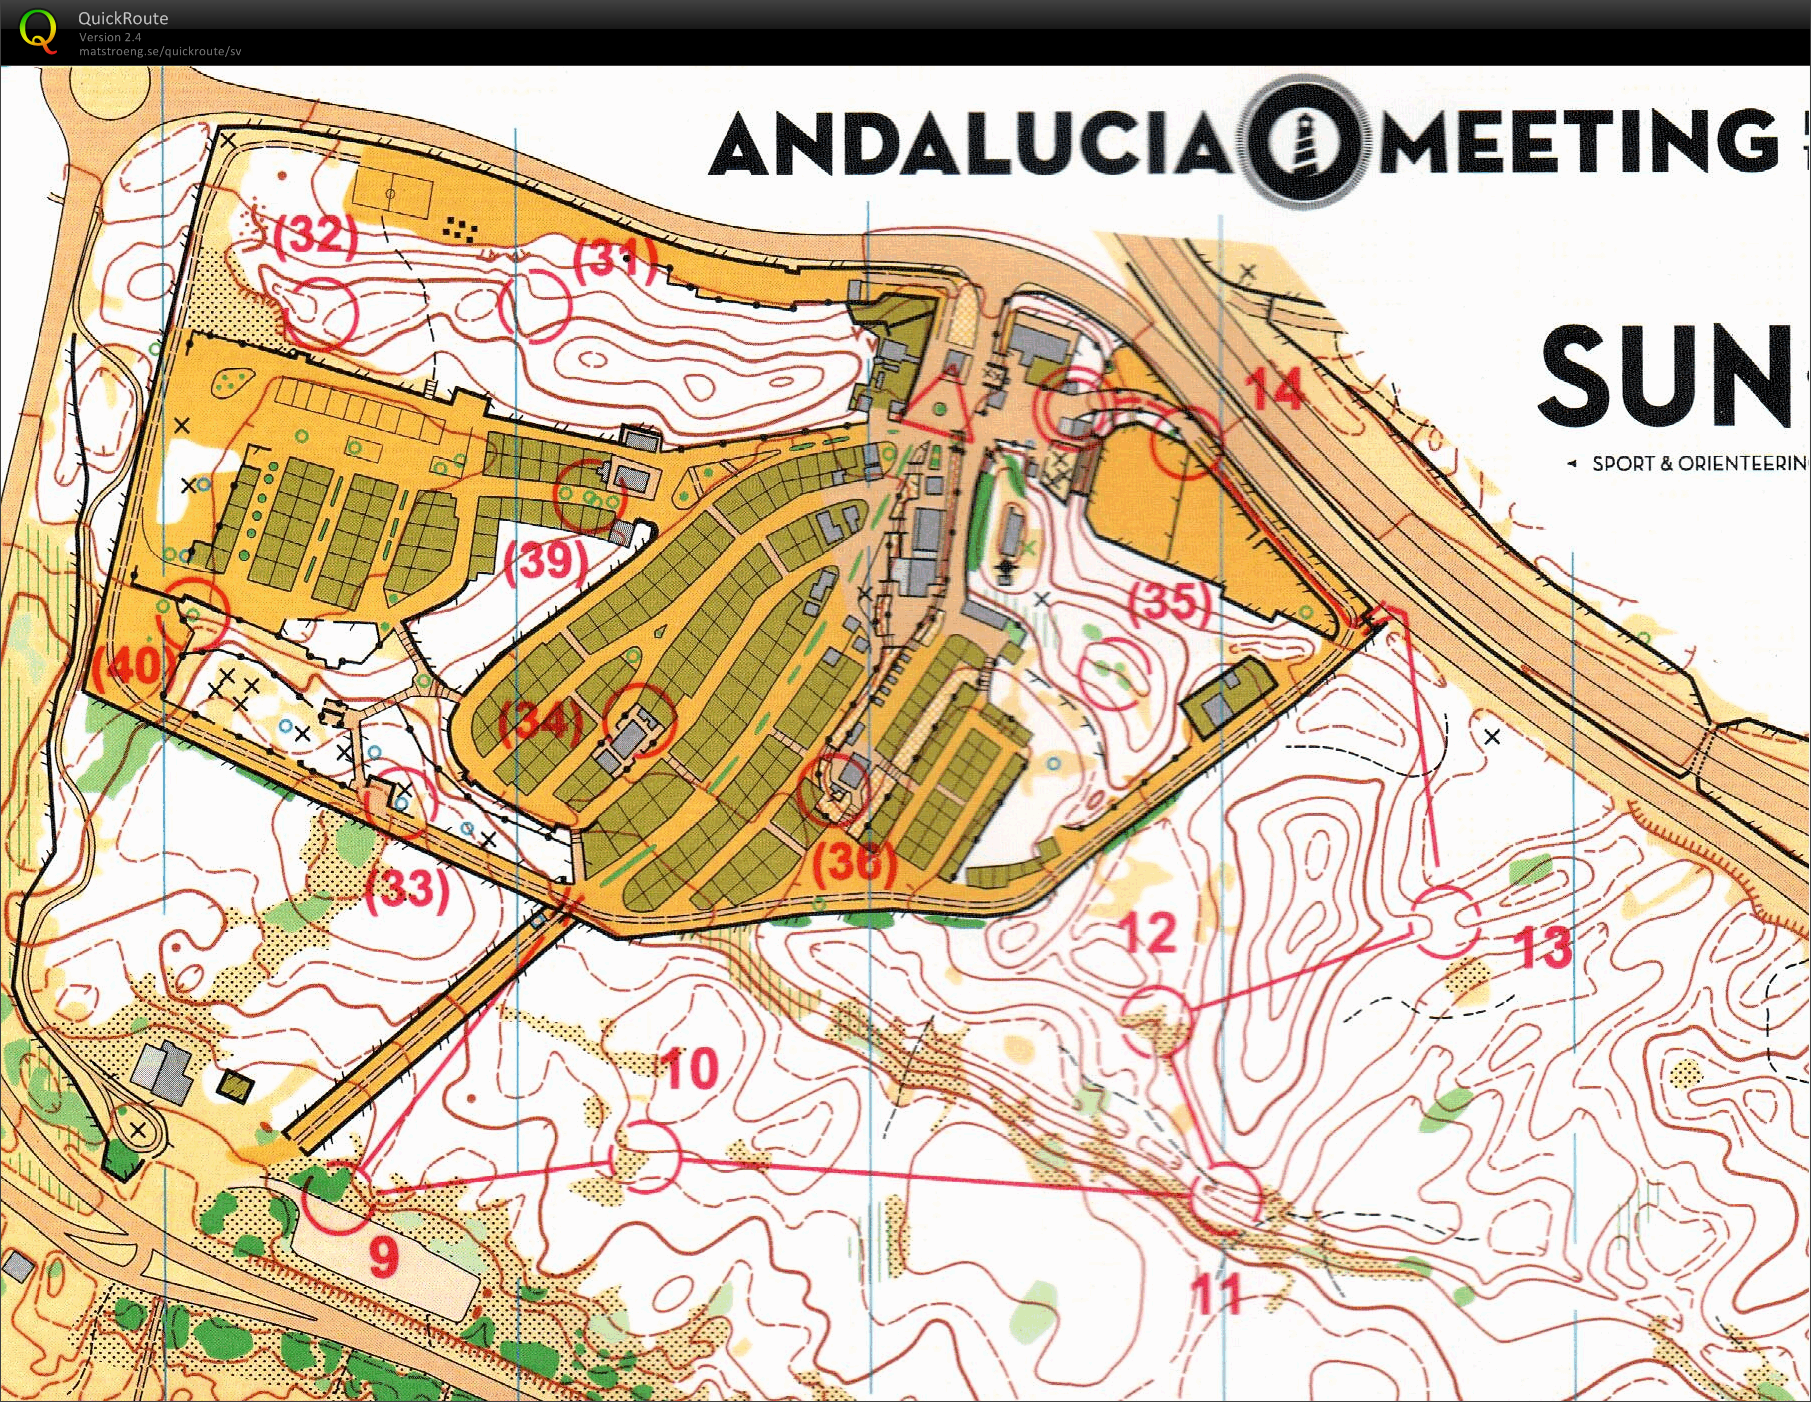 Andalucia-O-Meeting Prolog (2014-02-14)